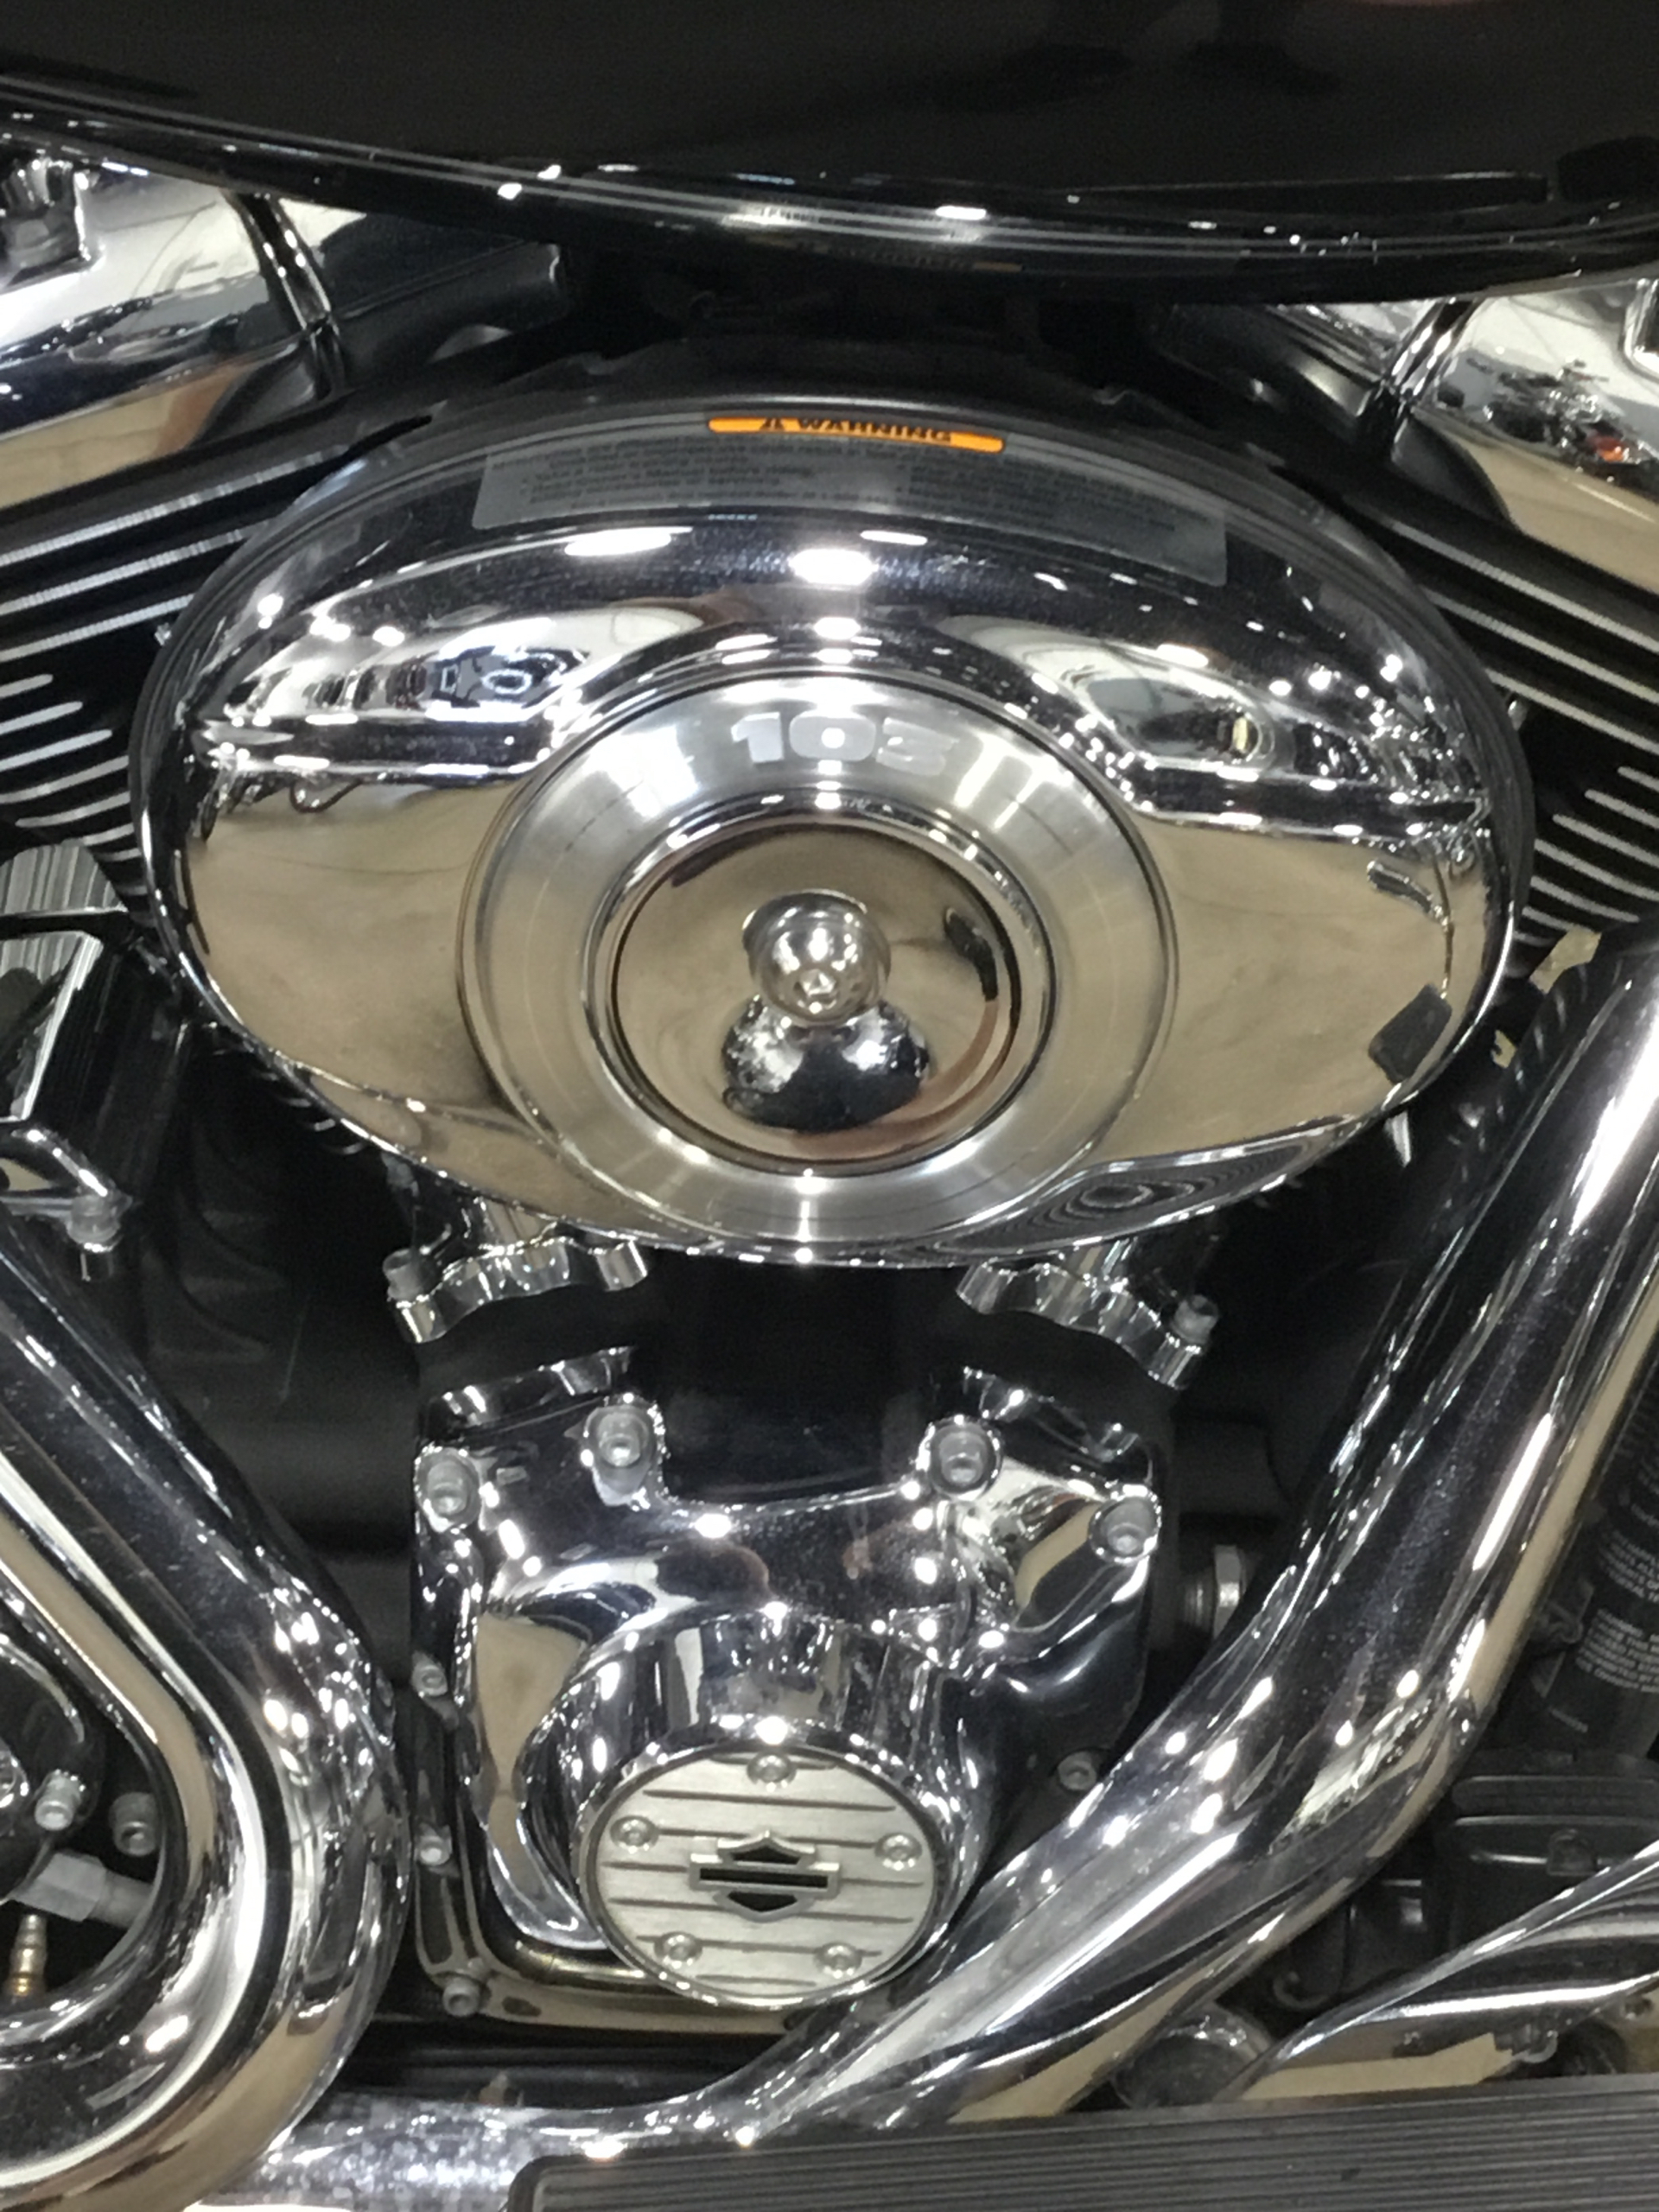 2012 Harley-Davidson Electra Glide® Classic in Sheboygan, Wisconsin - Photo 5